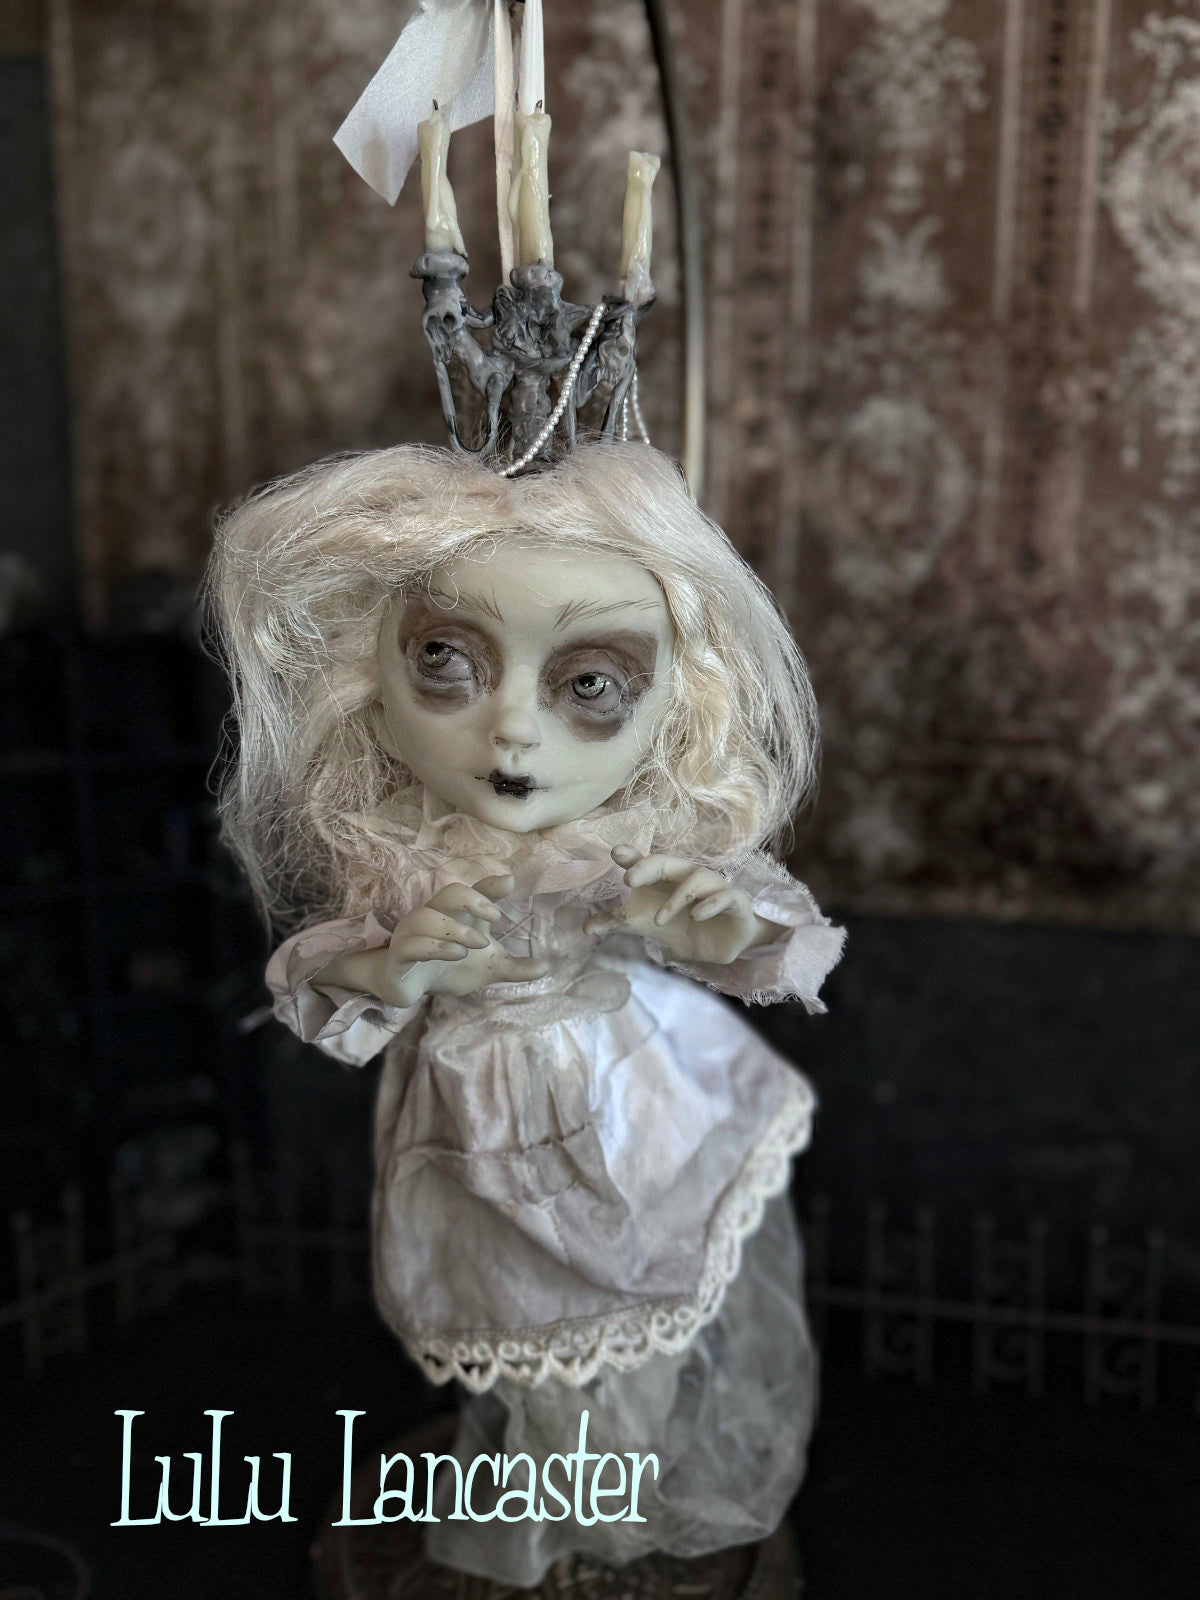 Isabella glow in the dark hanging ghost Original LuLu Lancaster Art Doll